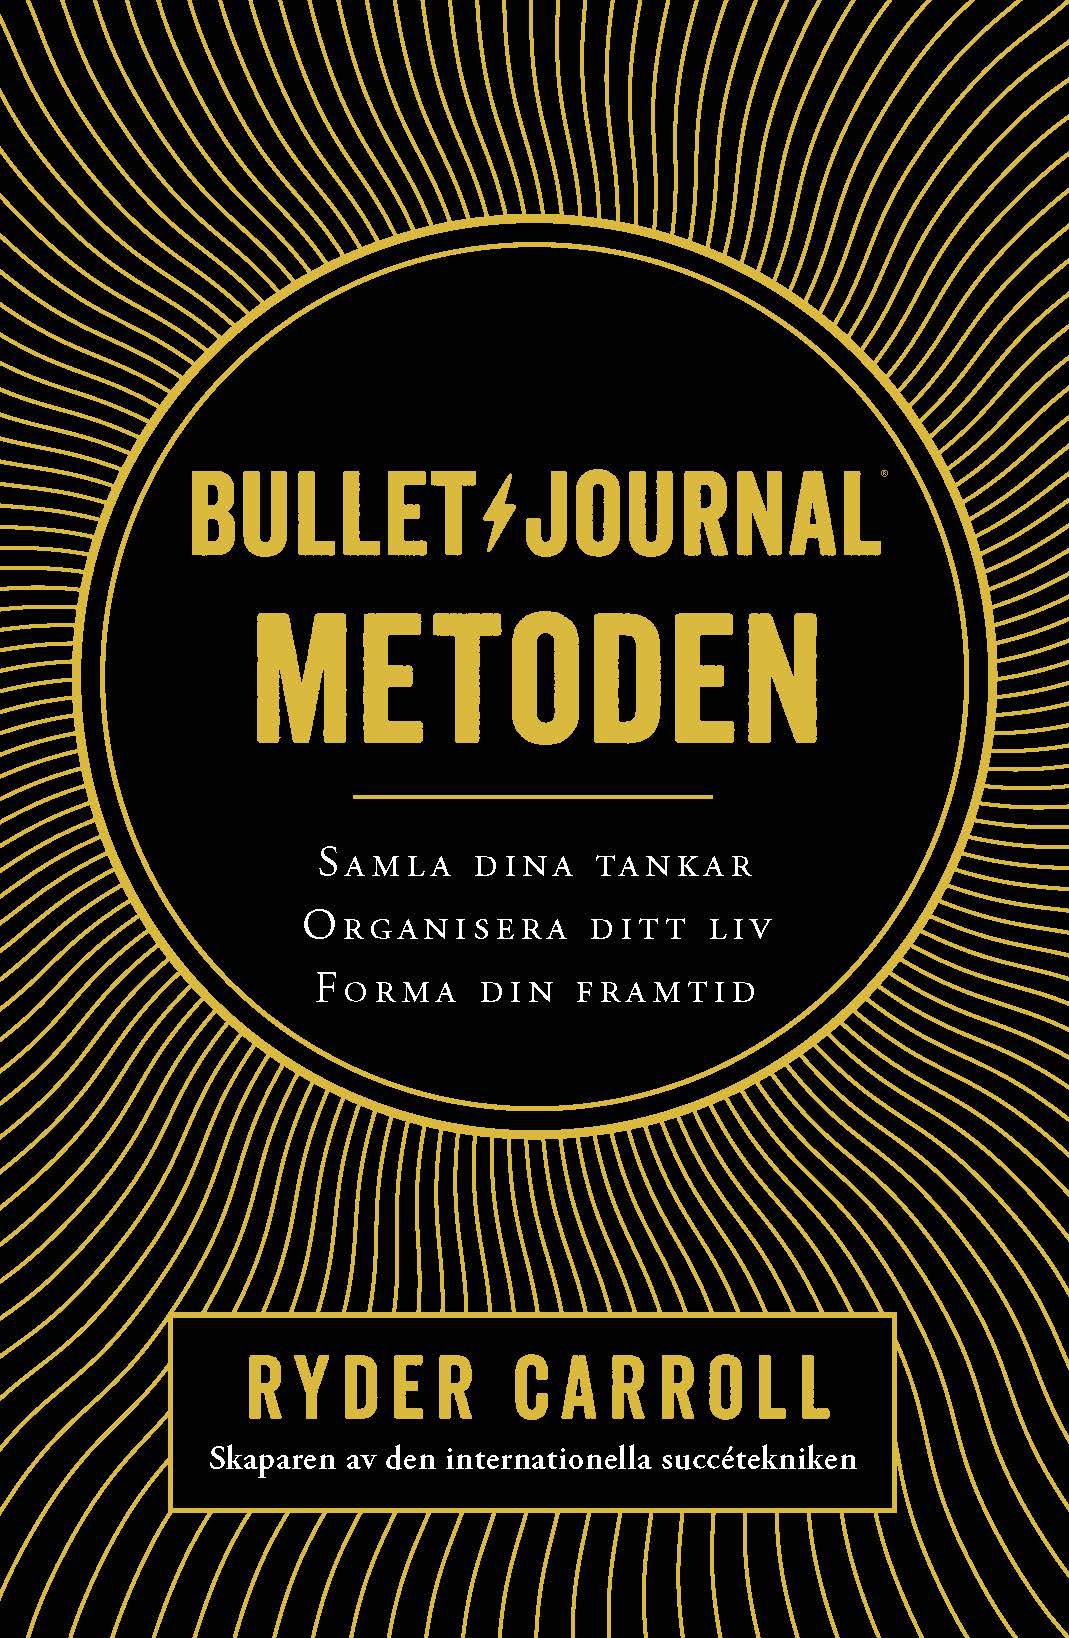 Ryder Carroll, Kjell Waltman: Bullet journal metoden (Hardcover, Swedish language, 2018, Volante)